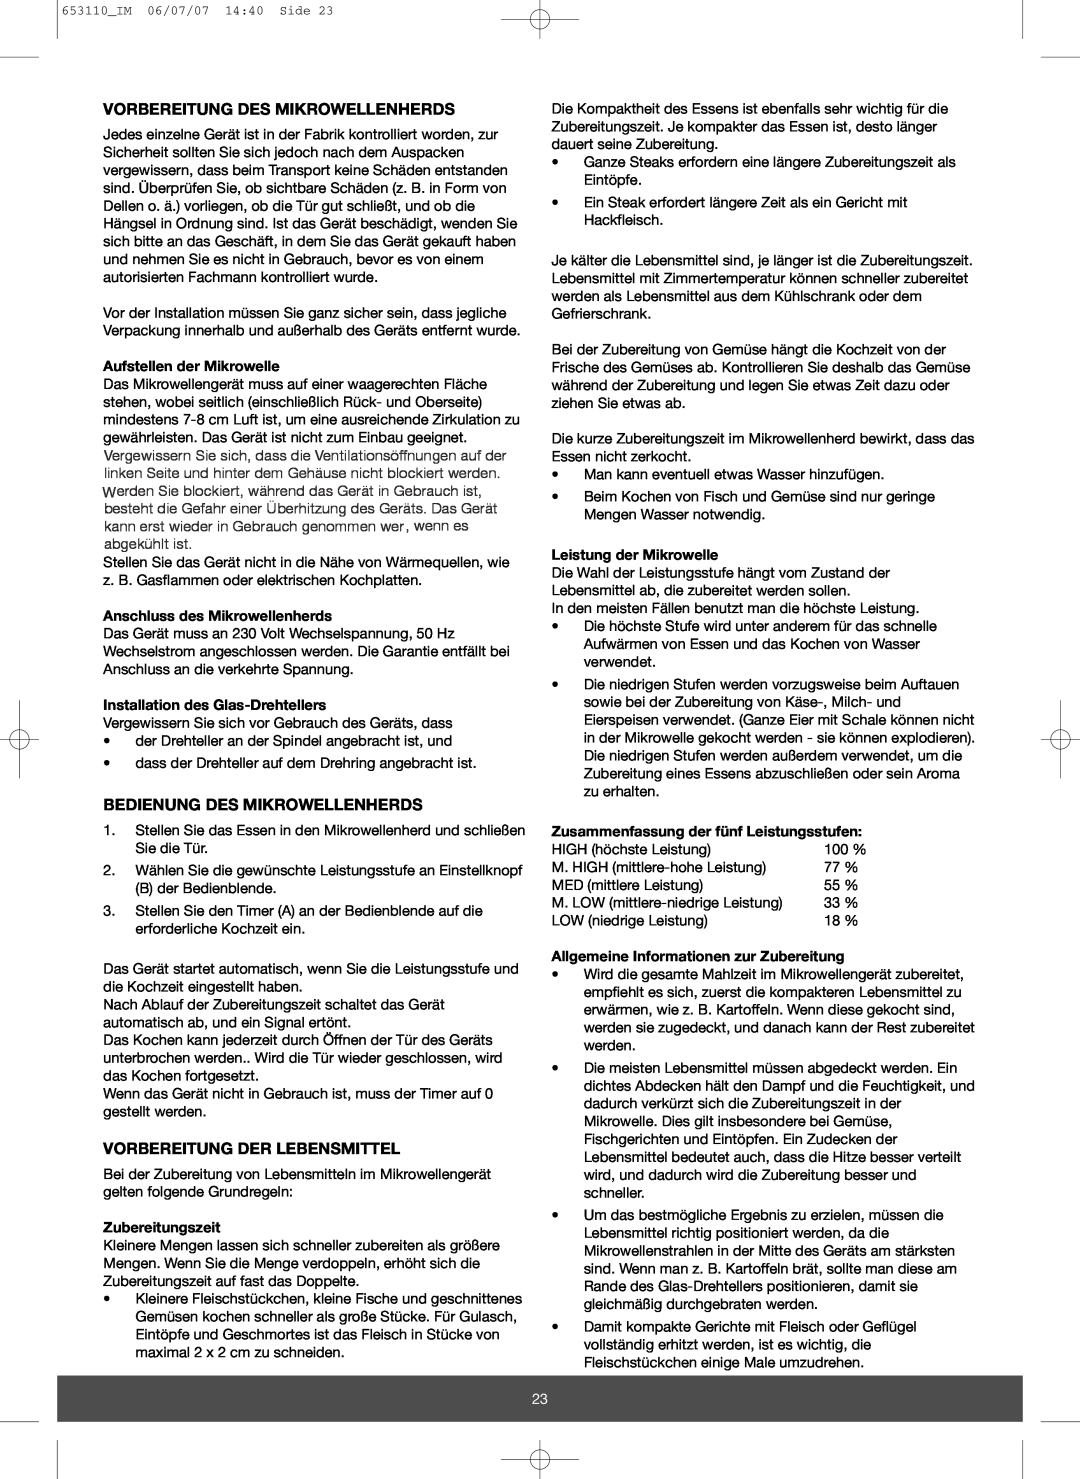 Melissa 653-111 manual Vorbereitung Des Mikrowellenherds, Bedienung Des Mikrowellenherds, Vorbereitung Der Lebensmittel 